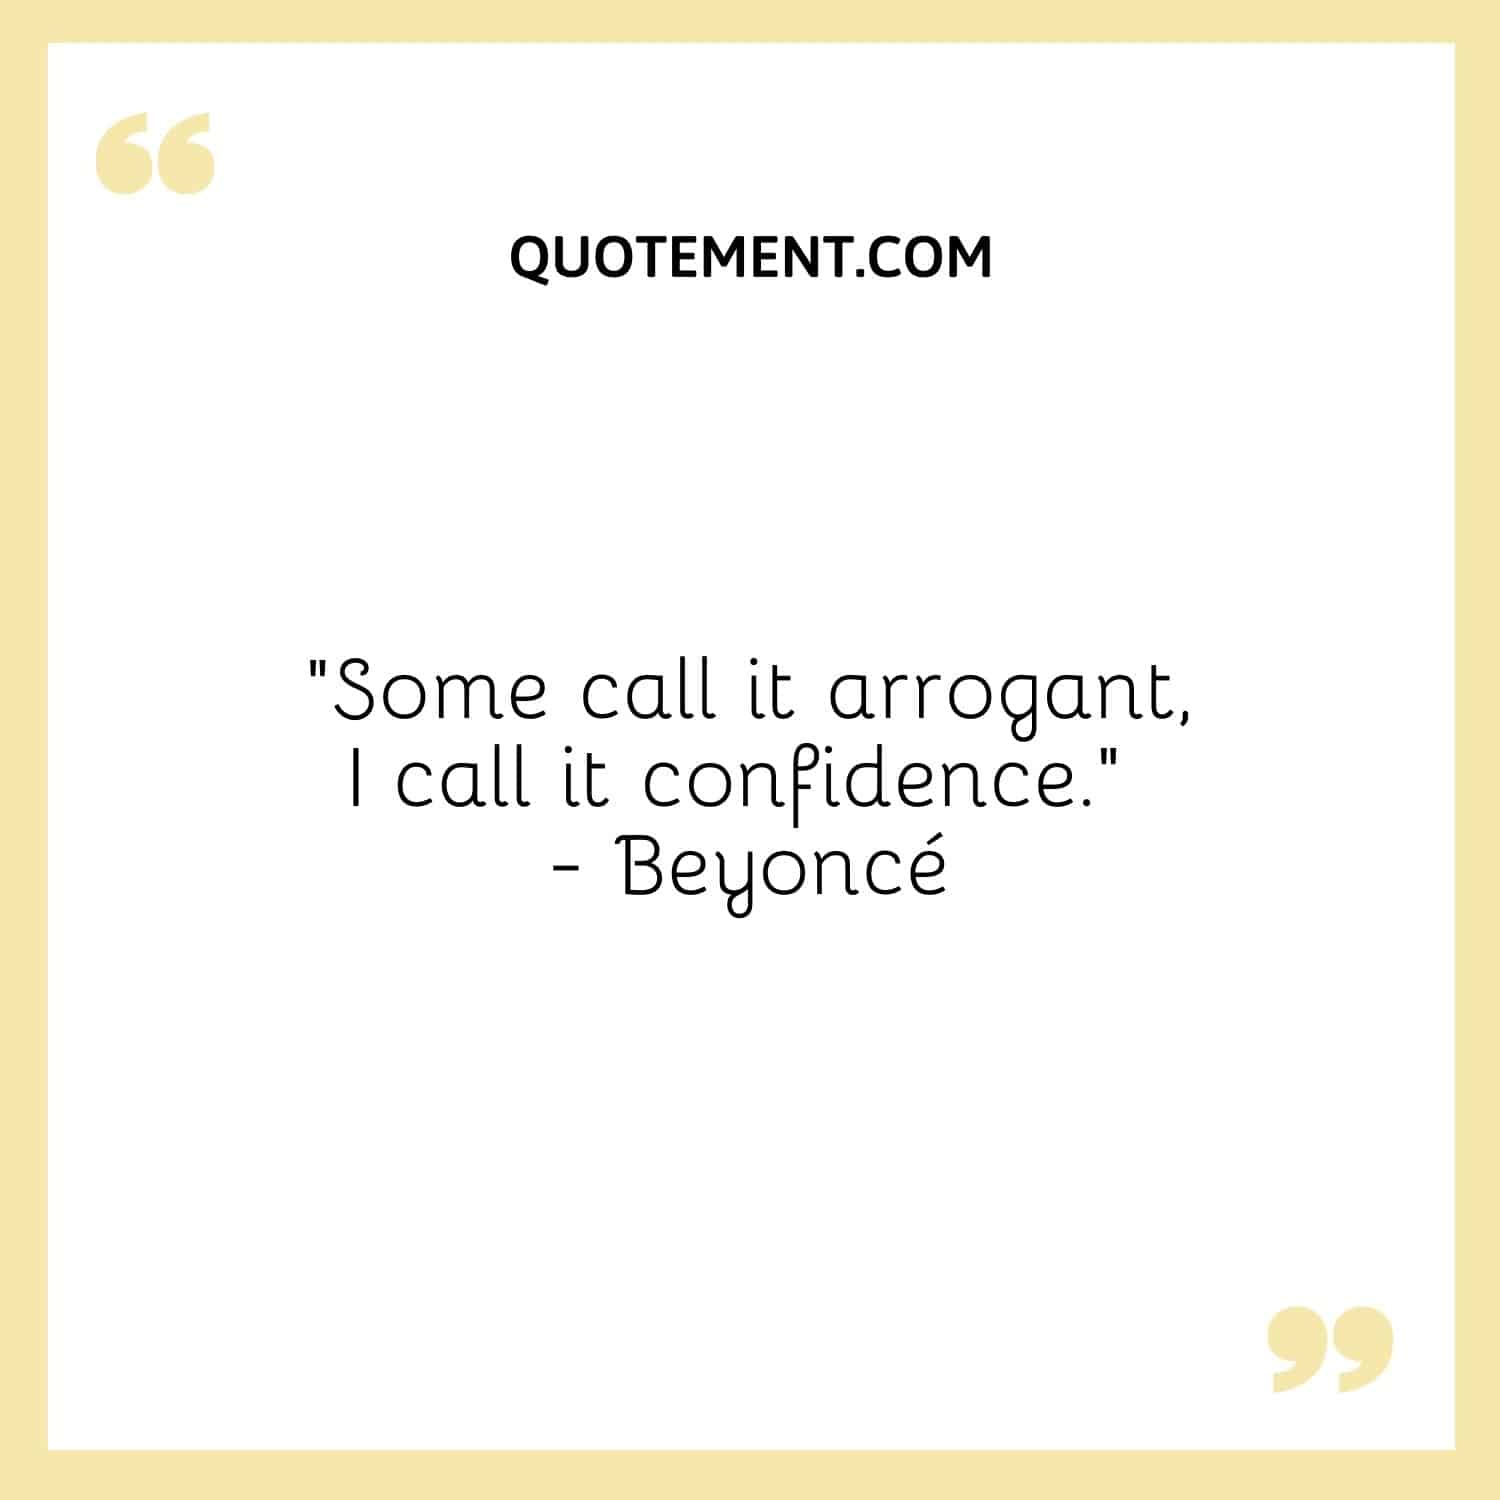 “Some call it arrogant, I call it confidence.” — Beyoncé